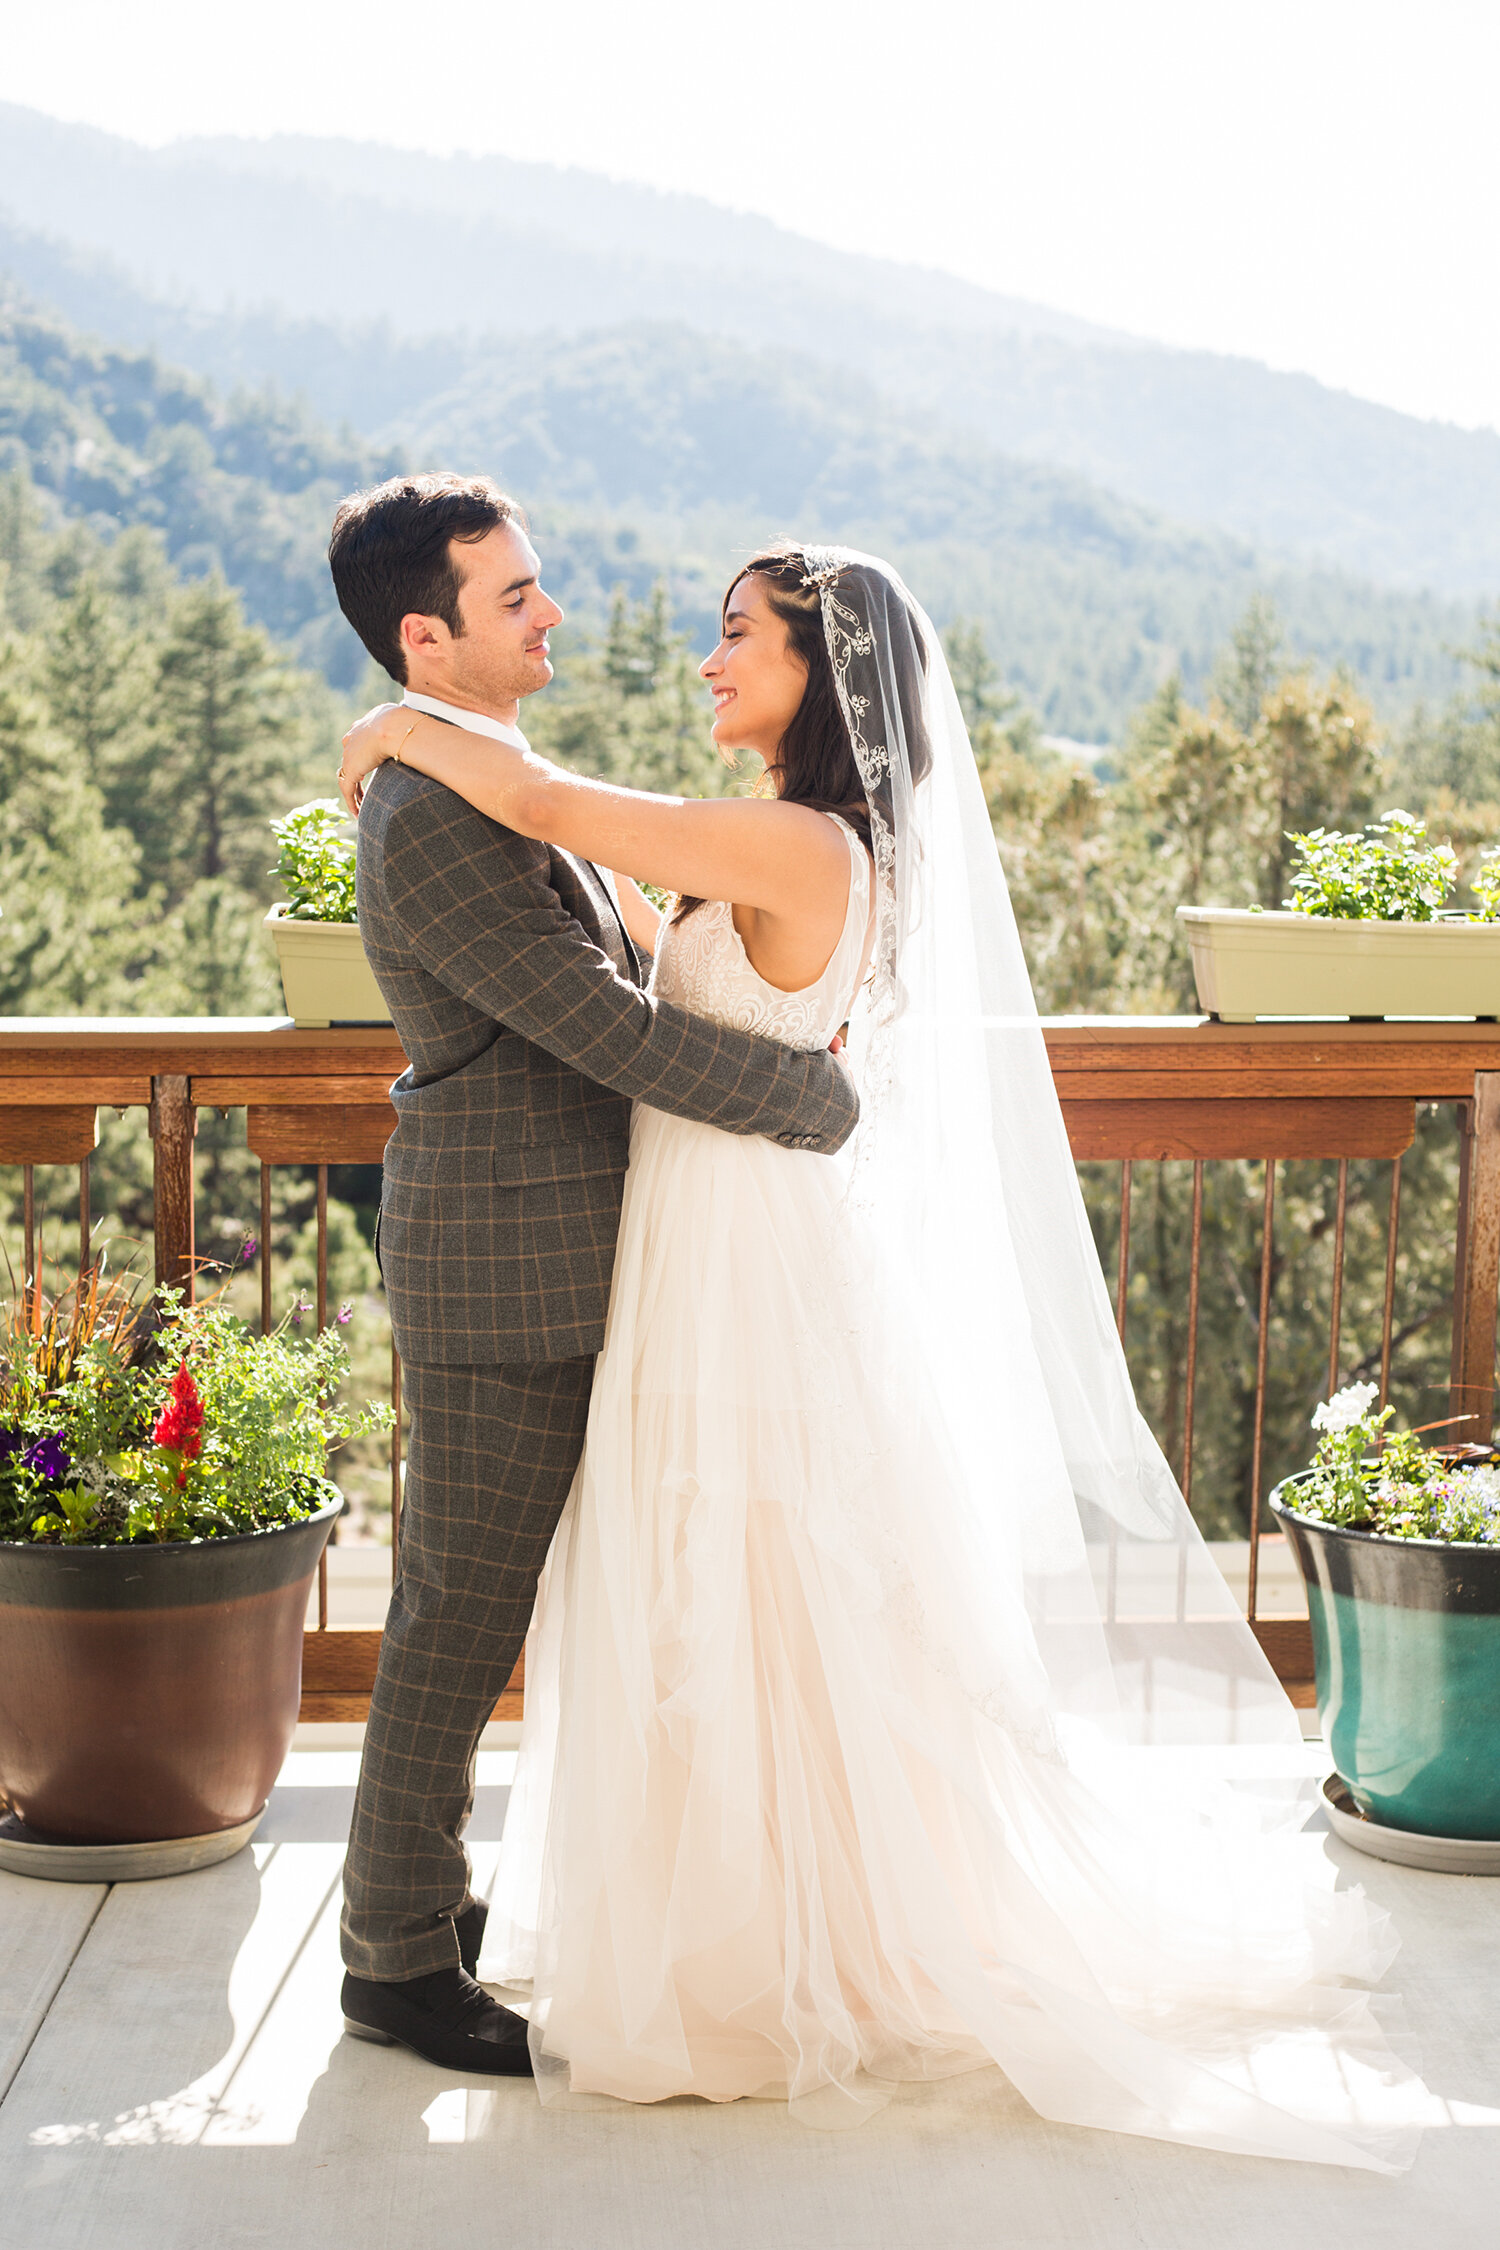 Backyard wedding in California Mountains